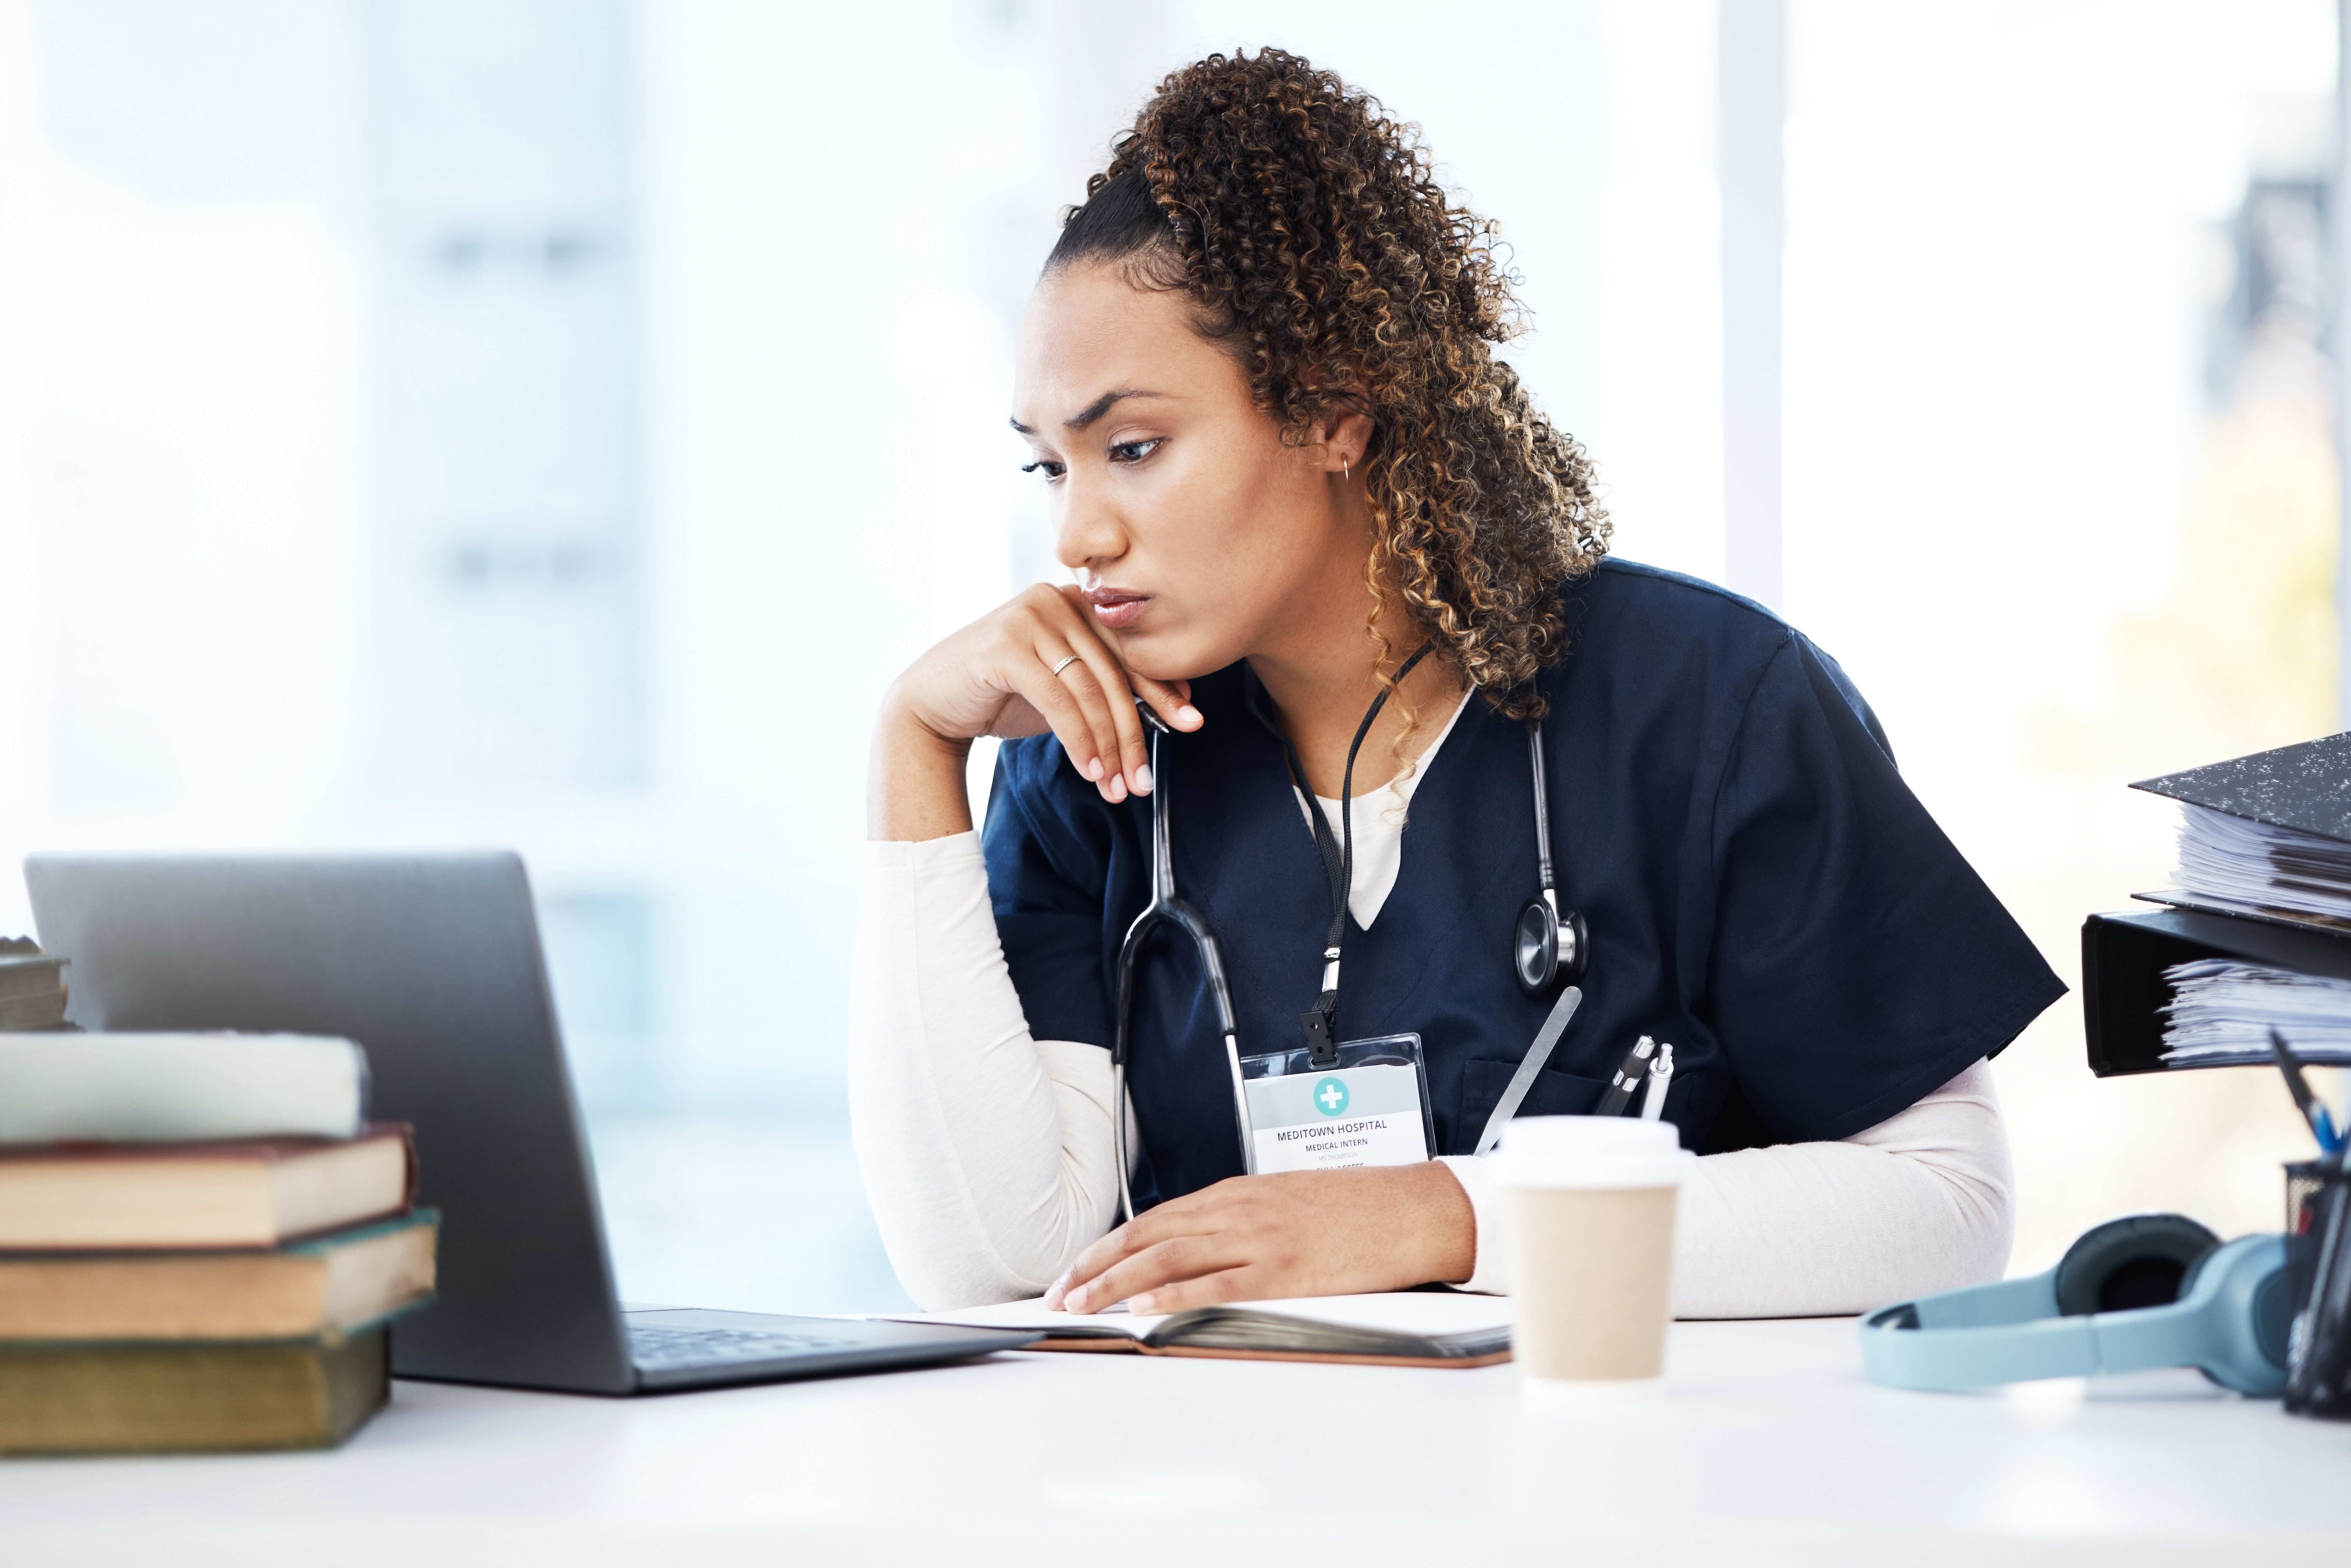 A nurse working on her computer | Source: Shutterstock